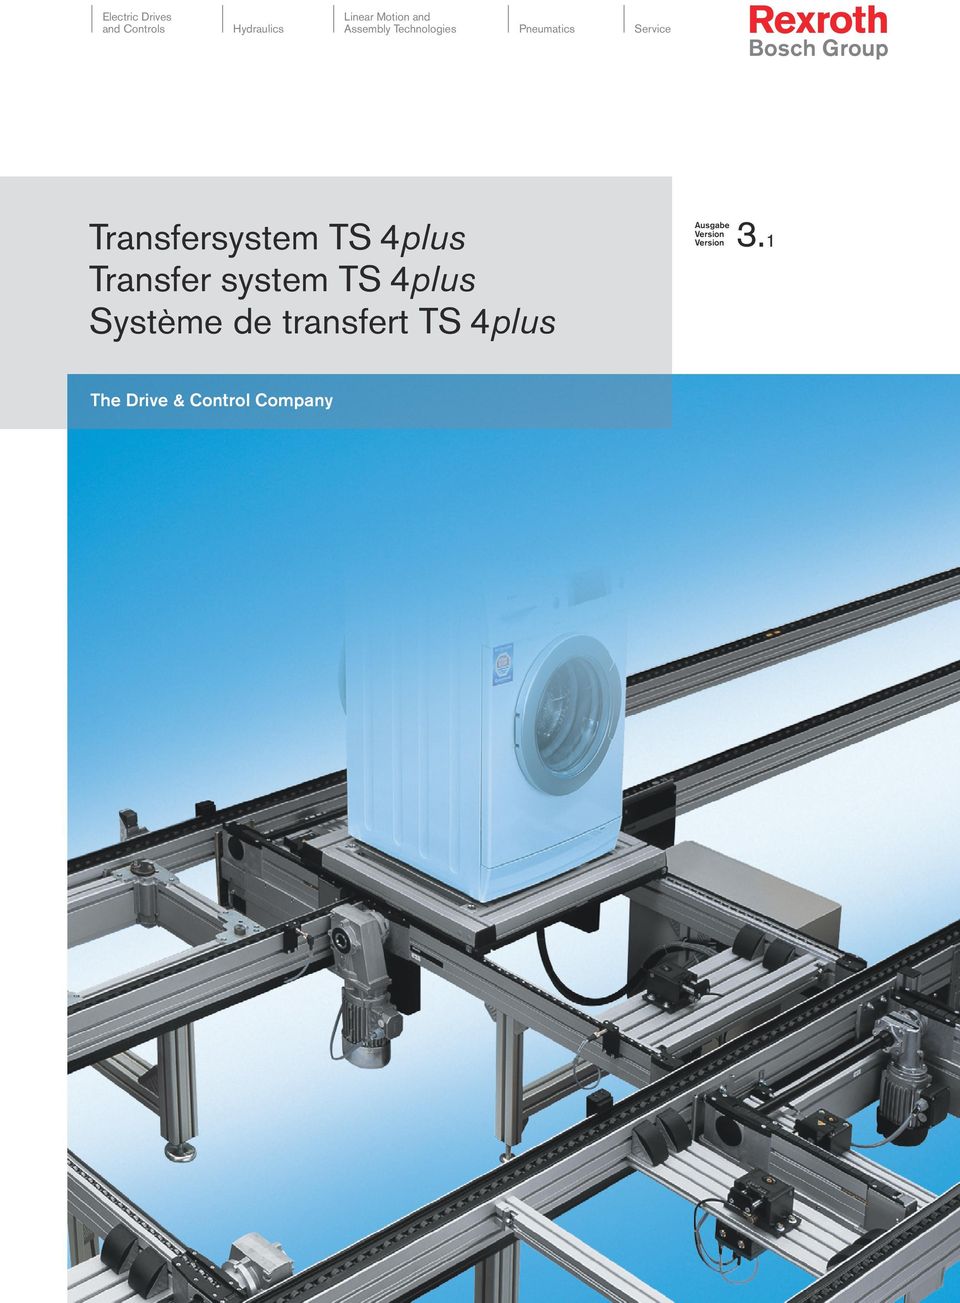 plus Transfer system TS plus Système de transfert TS